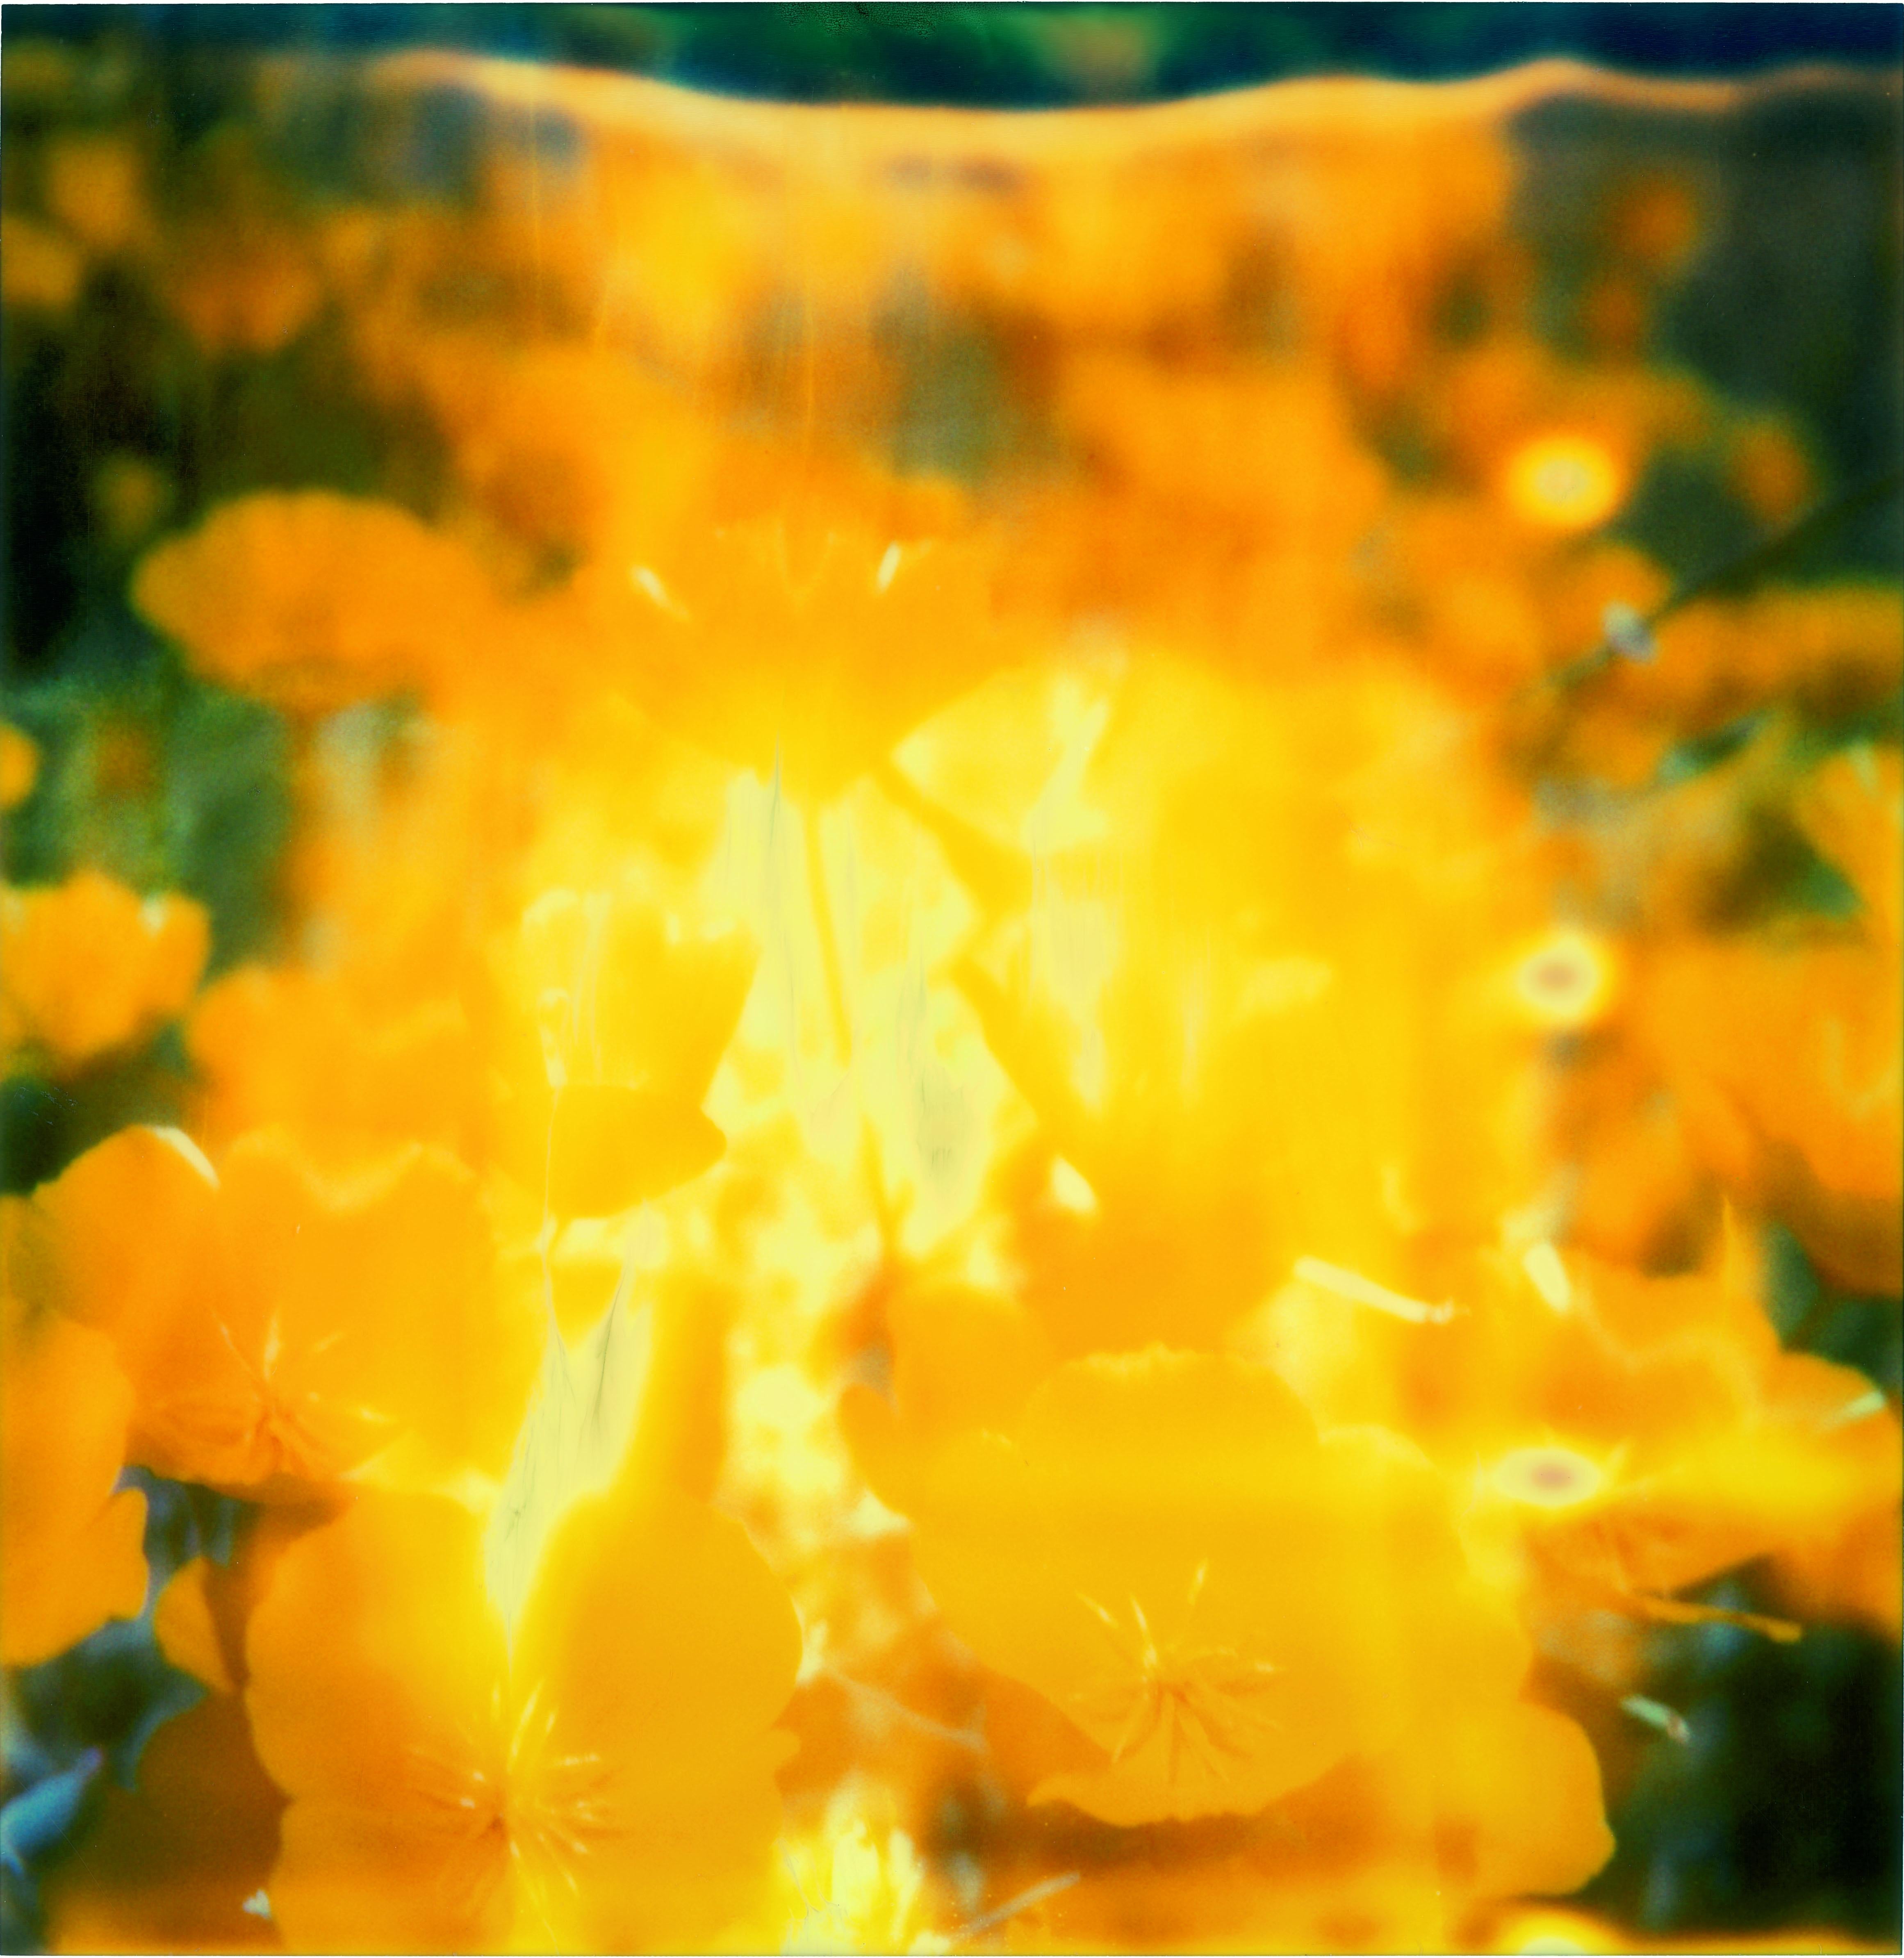 Stefanie Schneider Still-Life Photograph - Yellow Flower (The Last Picture Show) - analog, 128x126cm, mounted